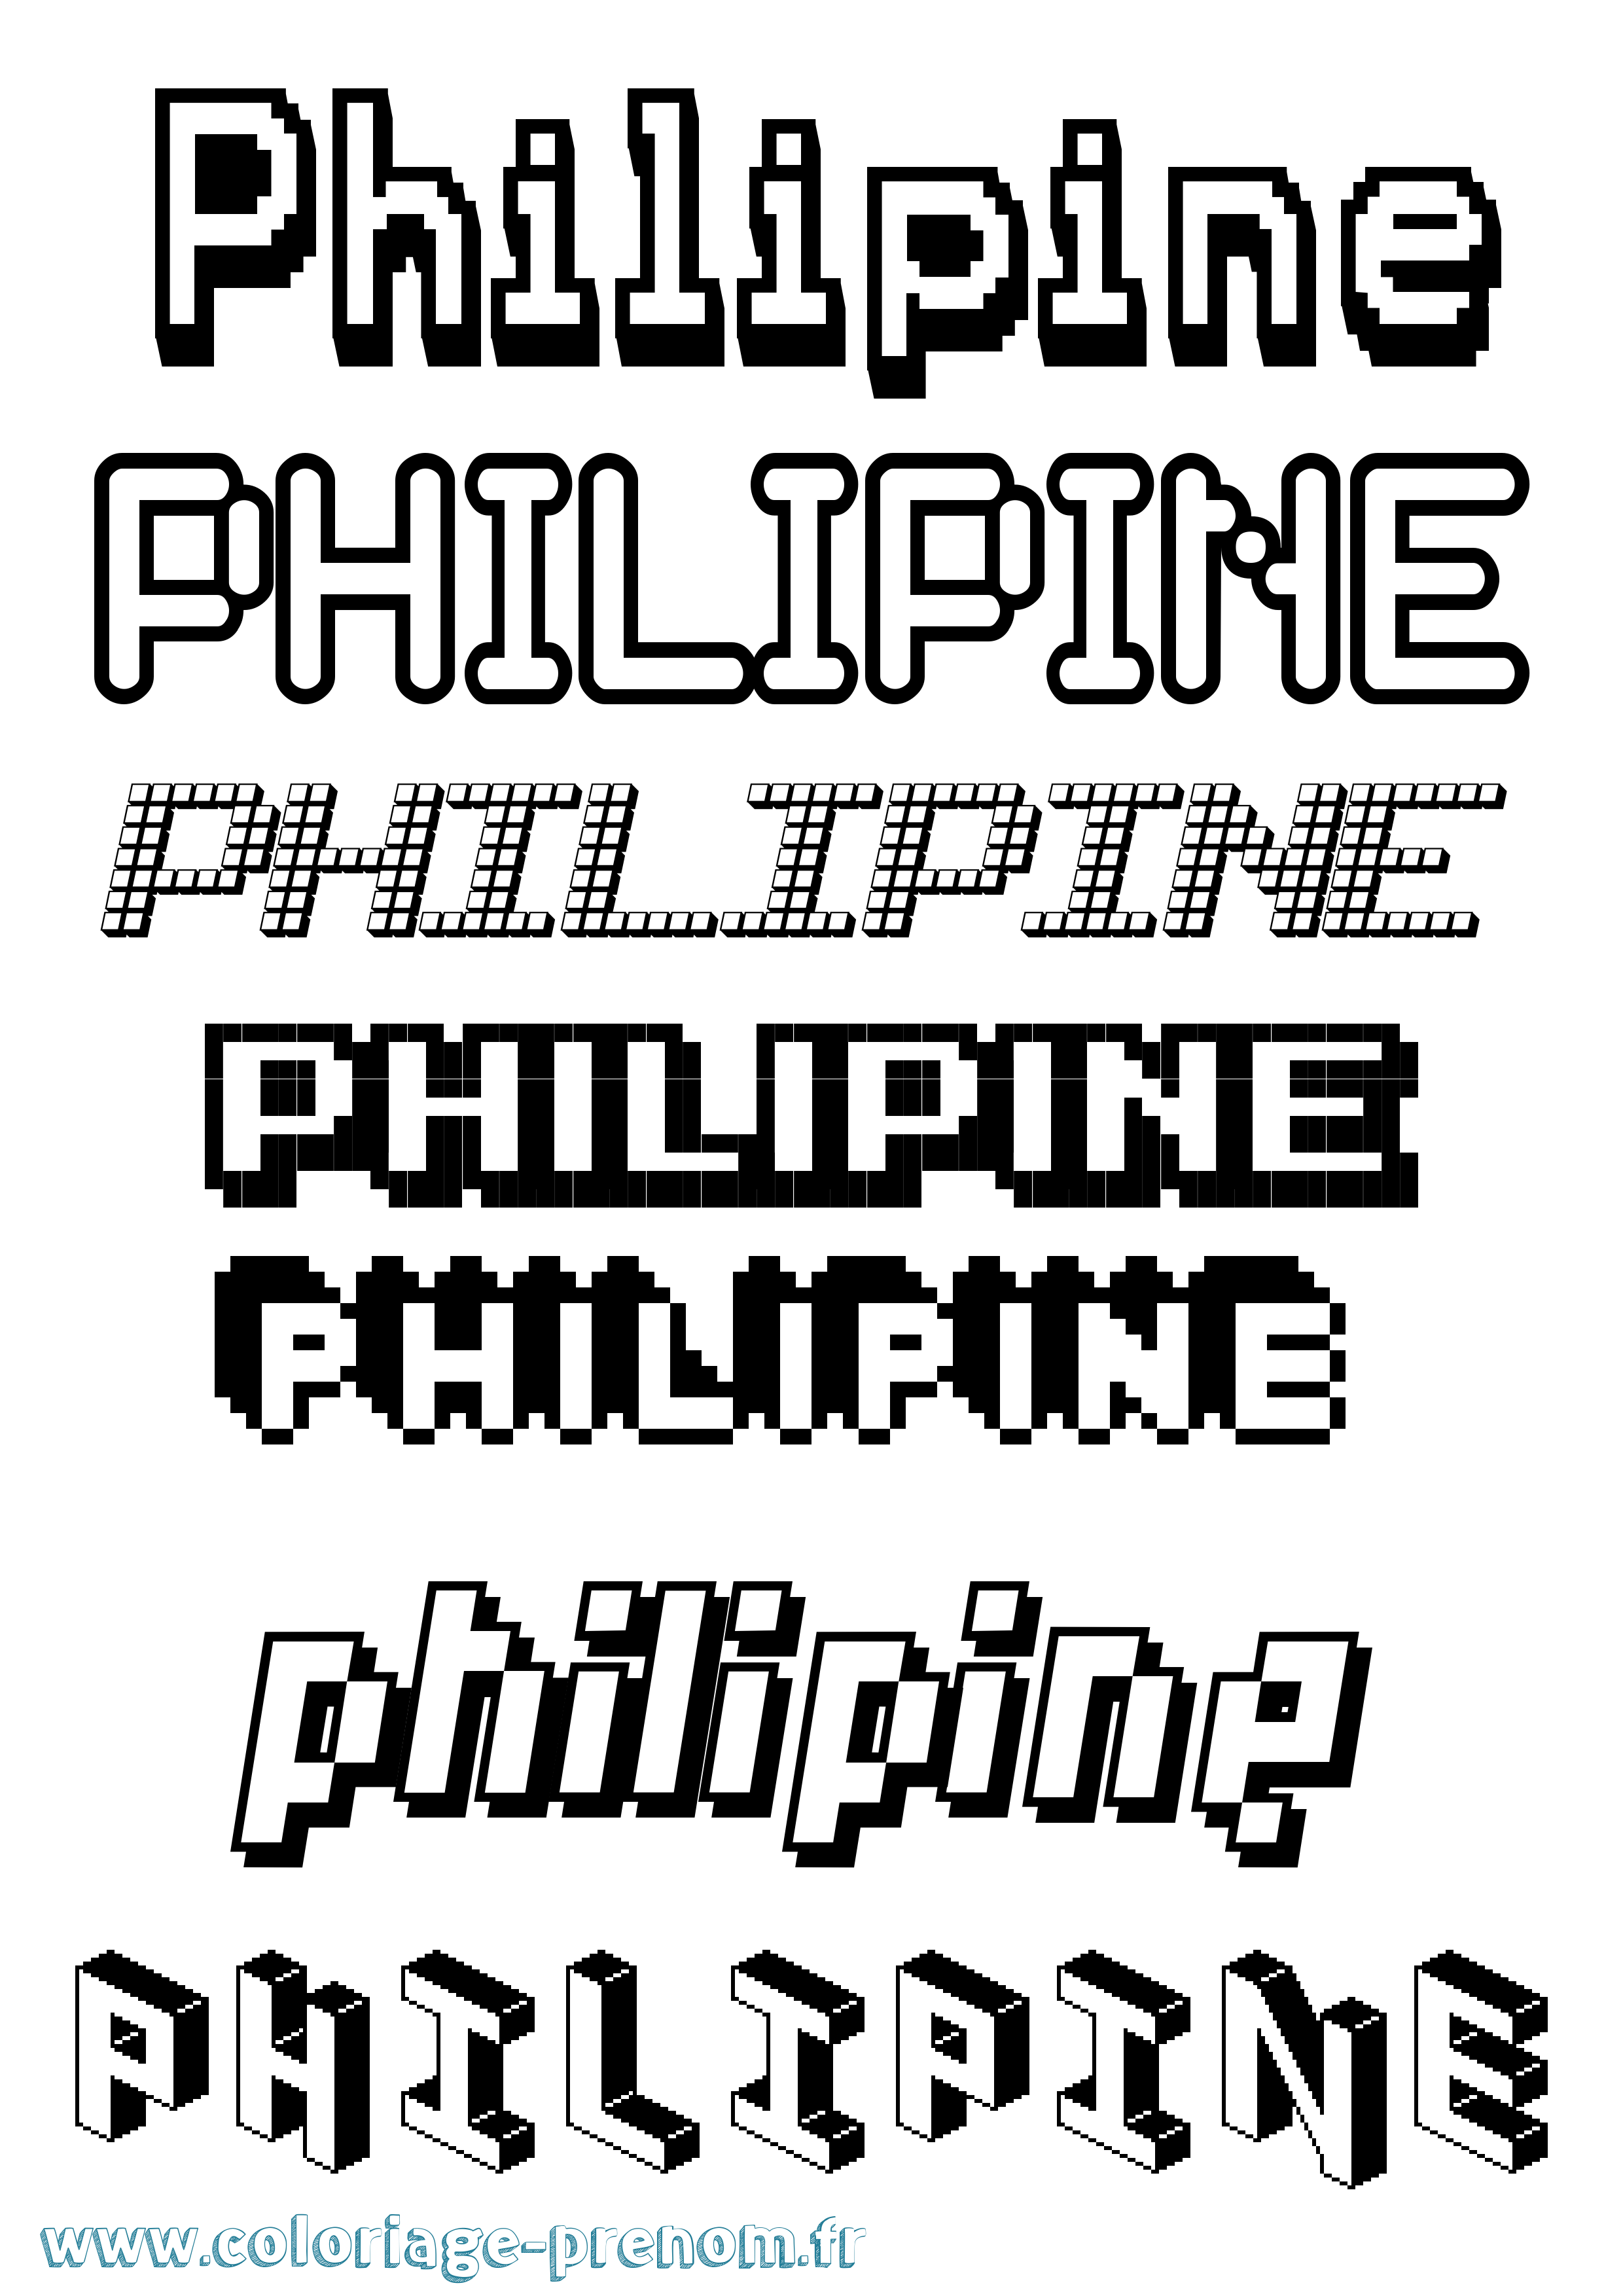 Coloriage prénom Philipine Pixel